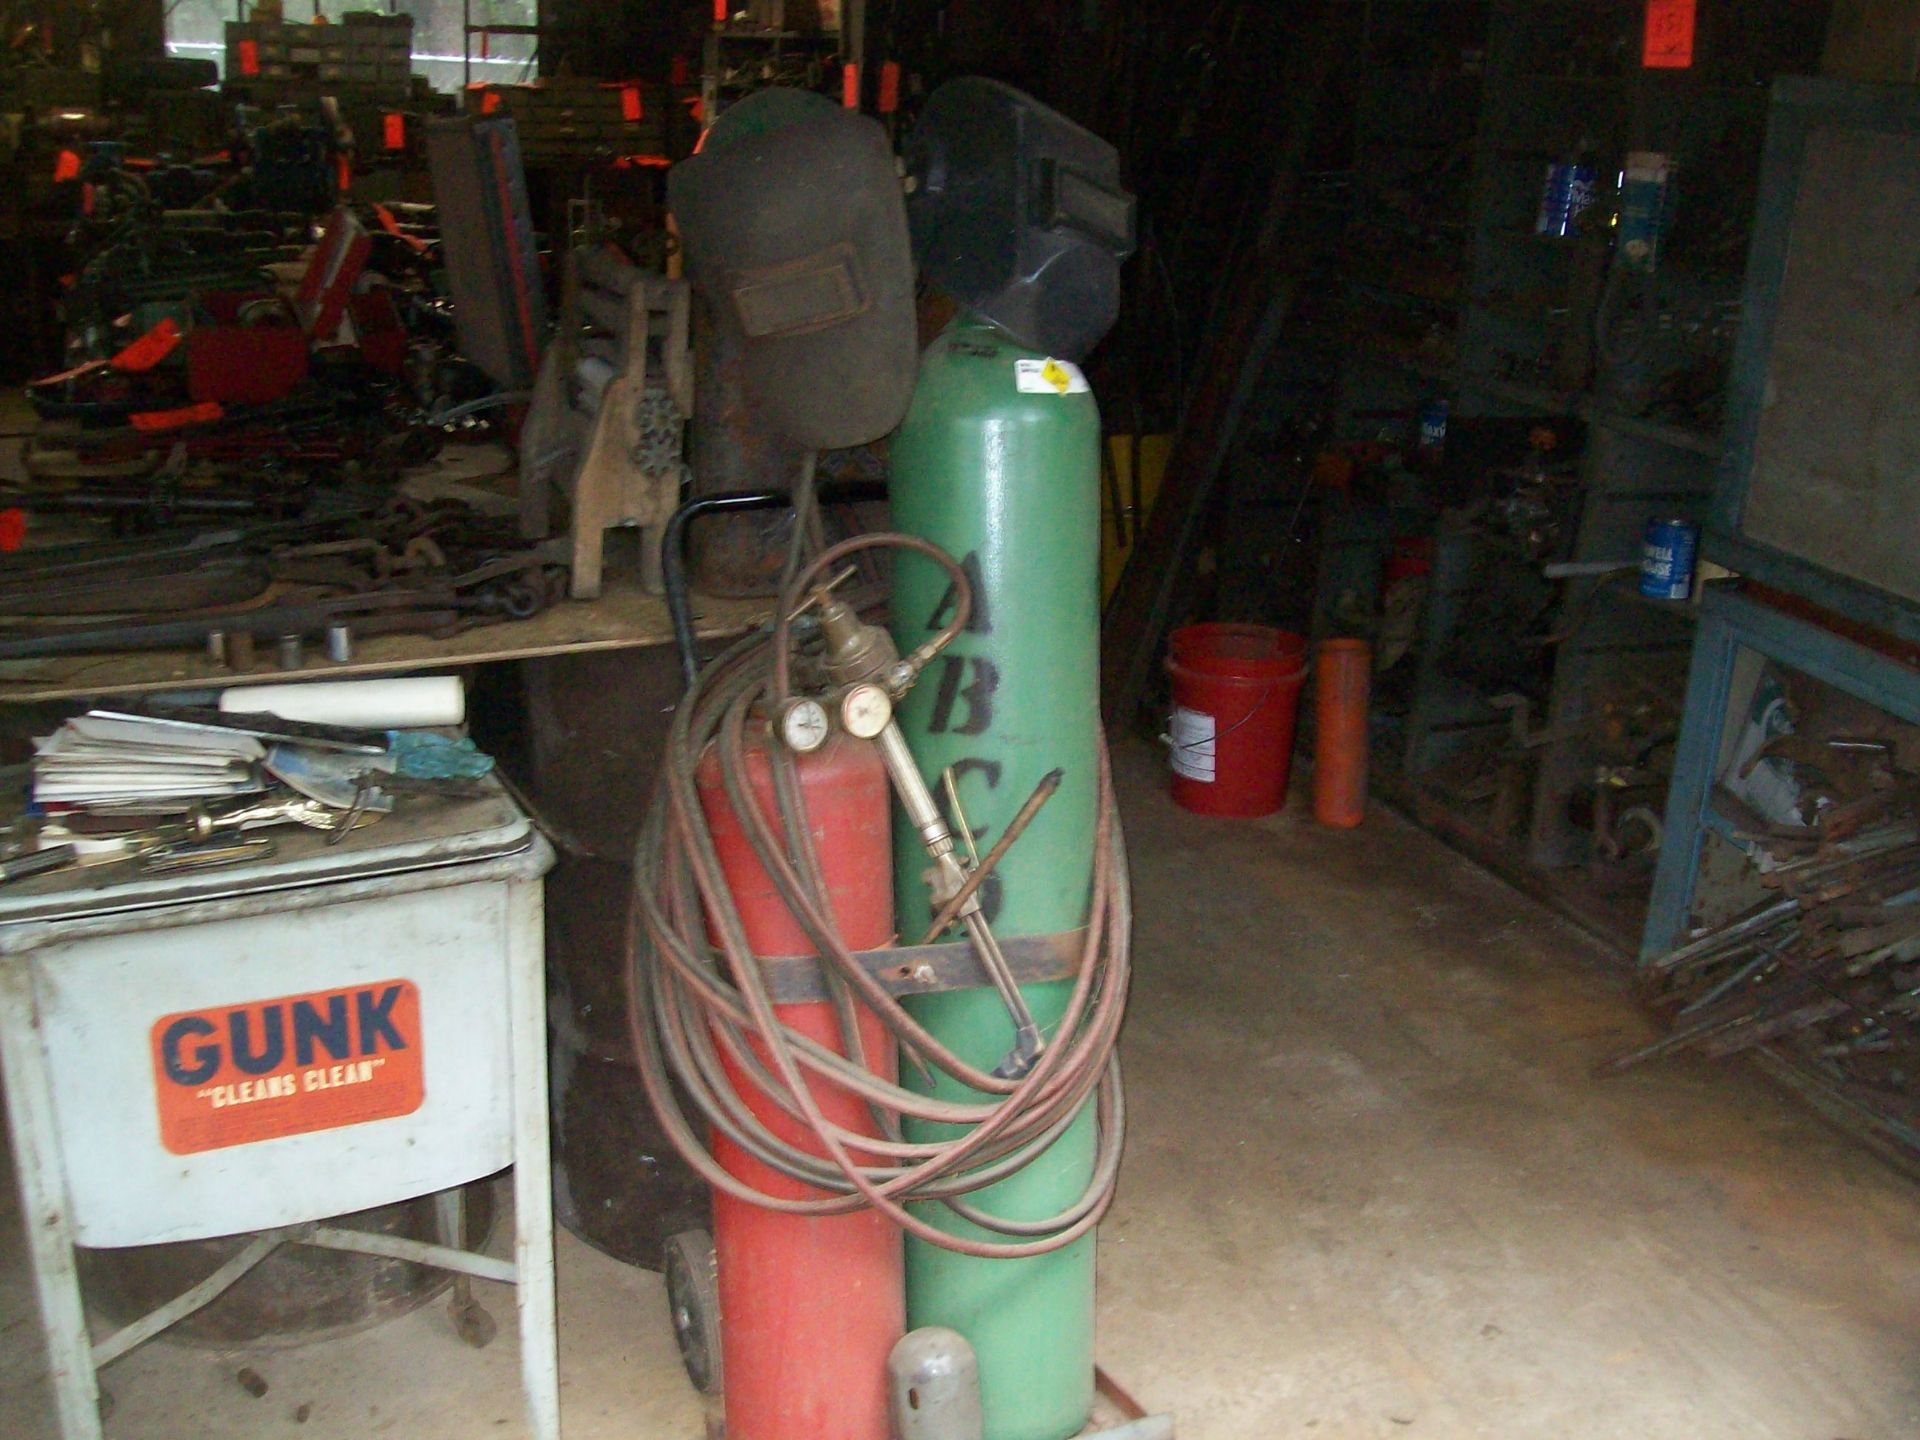 Portable cut and weld unit with tanks, hose, regulators, tips, helmets